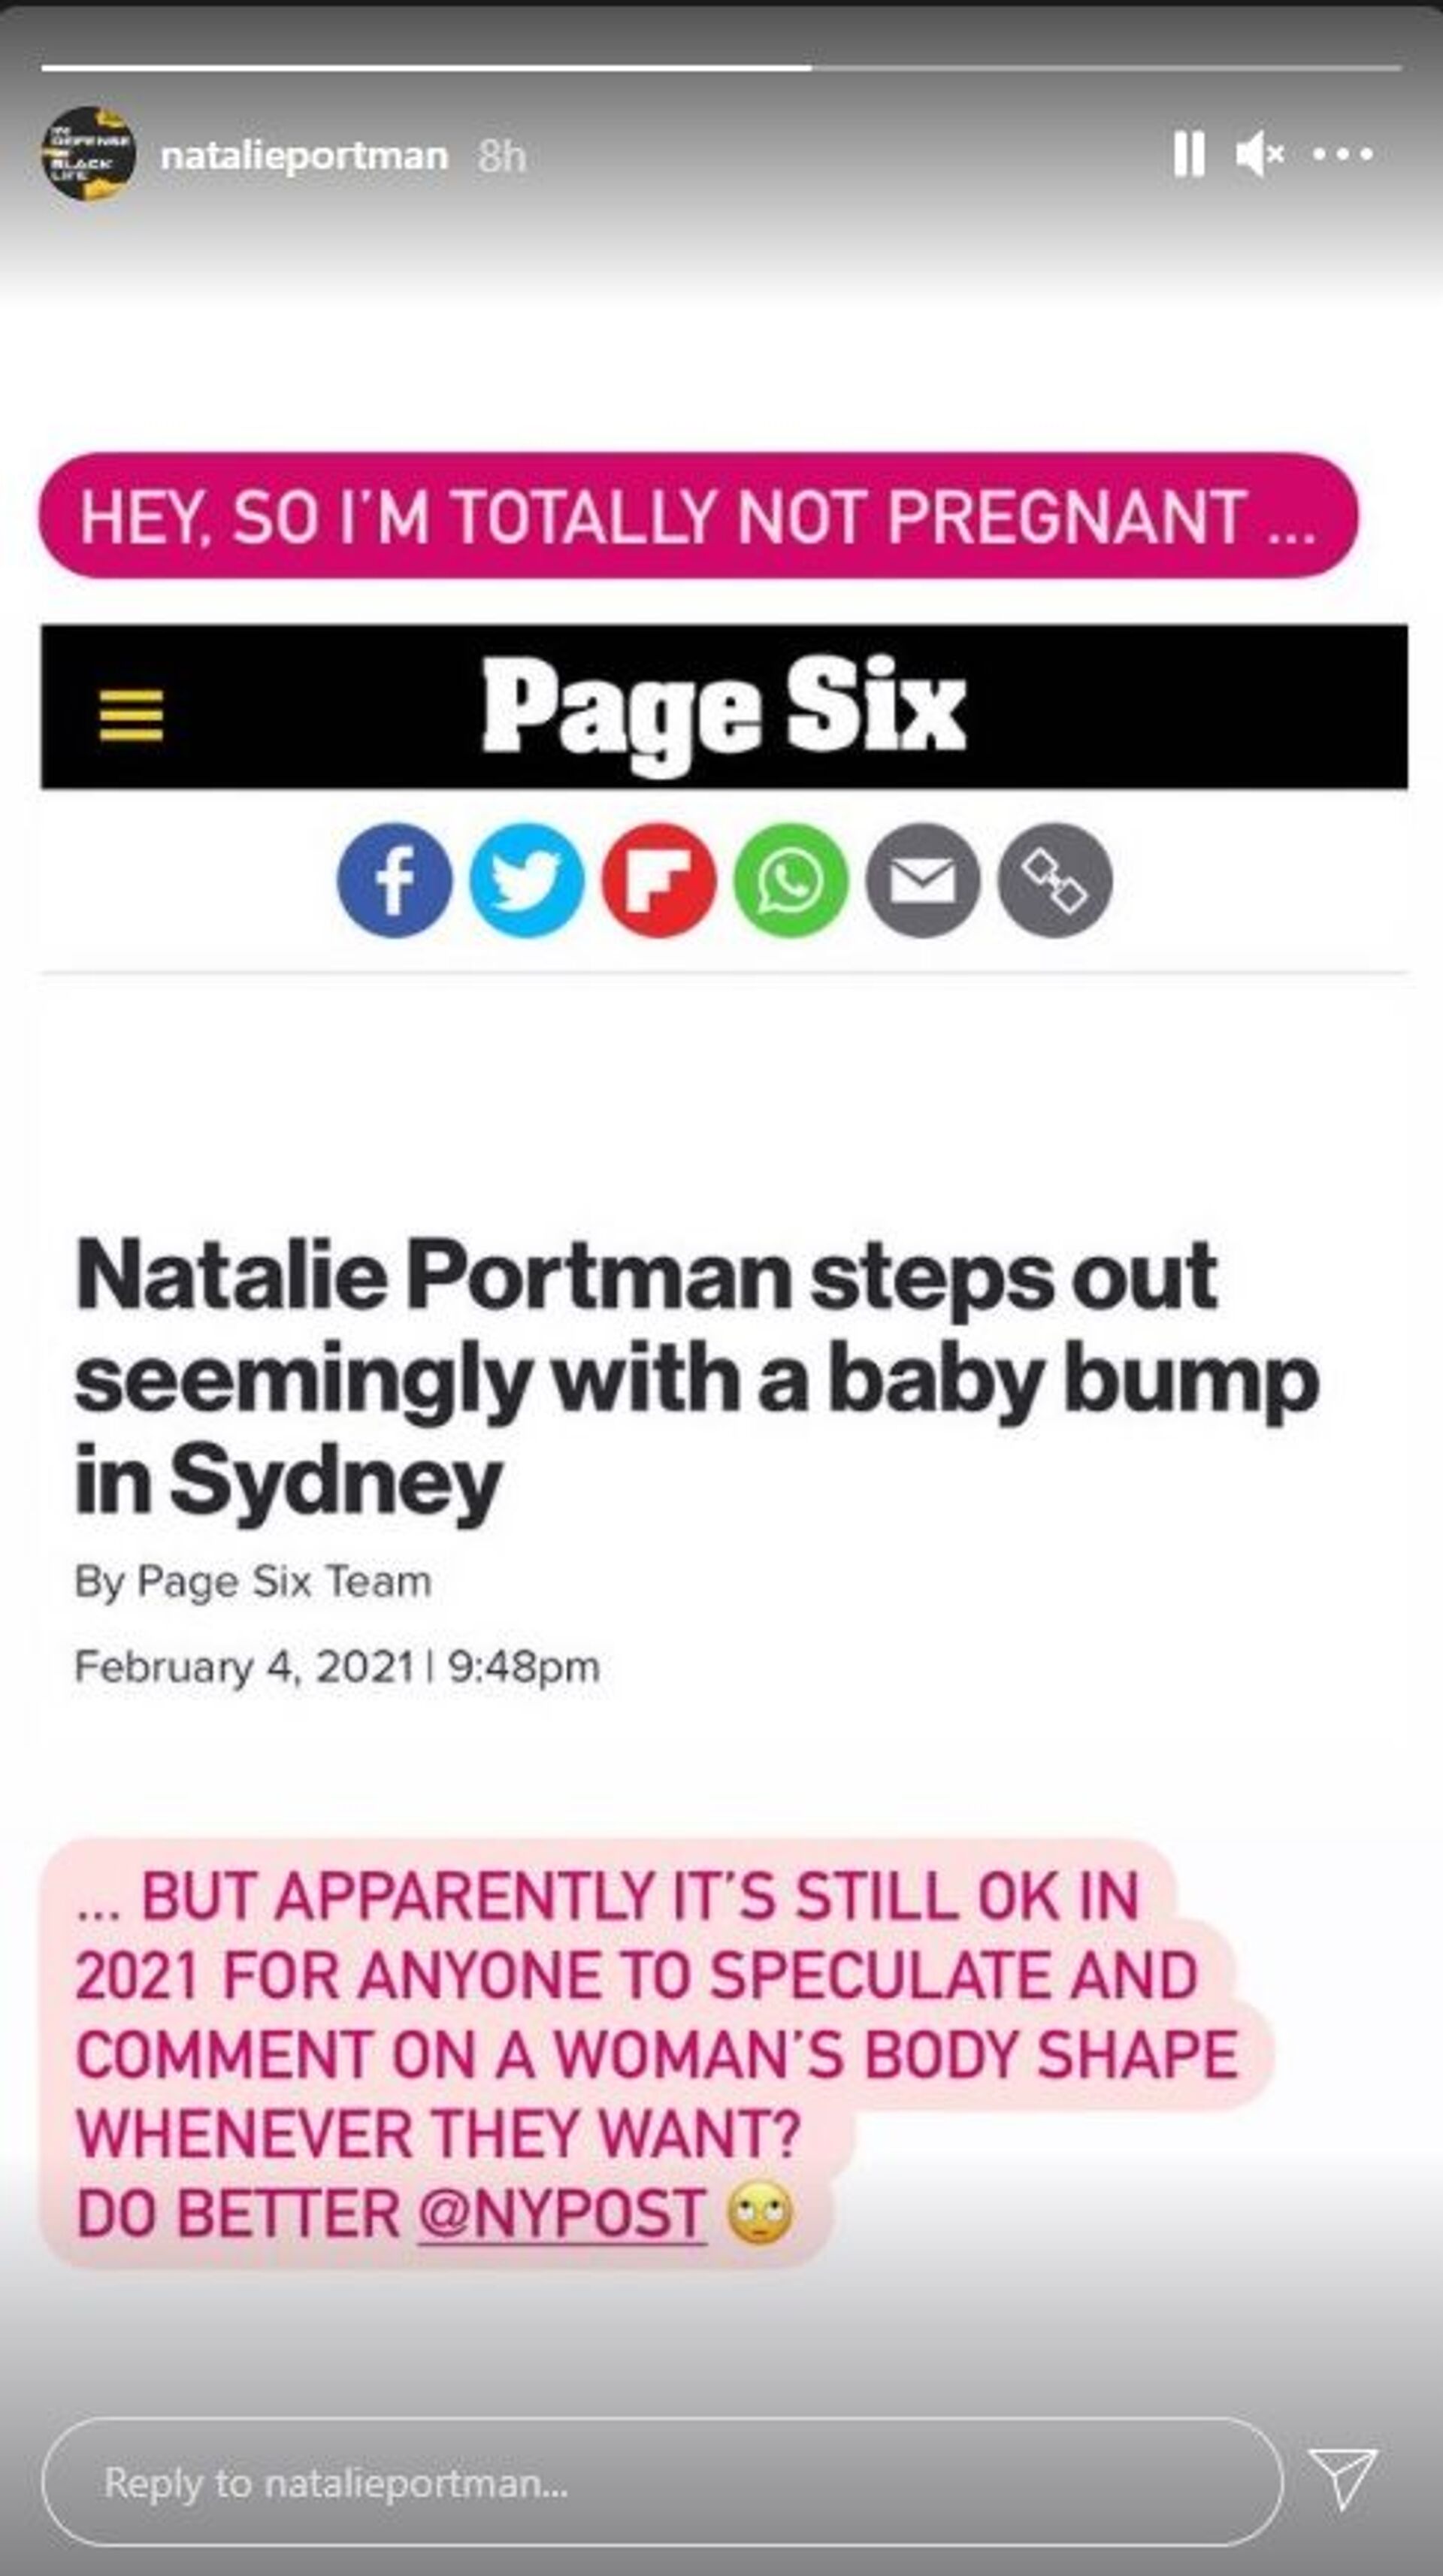 Natalie Portman Dismisses Pregnancy Rumours Started by NY Post, Accuses Tabloid of 'Bodyshaming' - Sputnik International, 1920, 06.02.2021